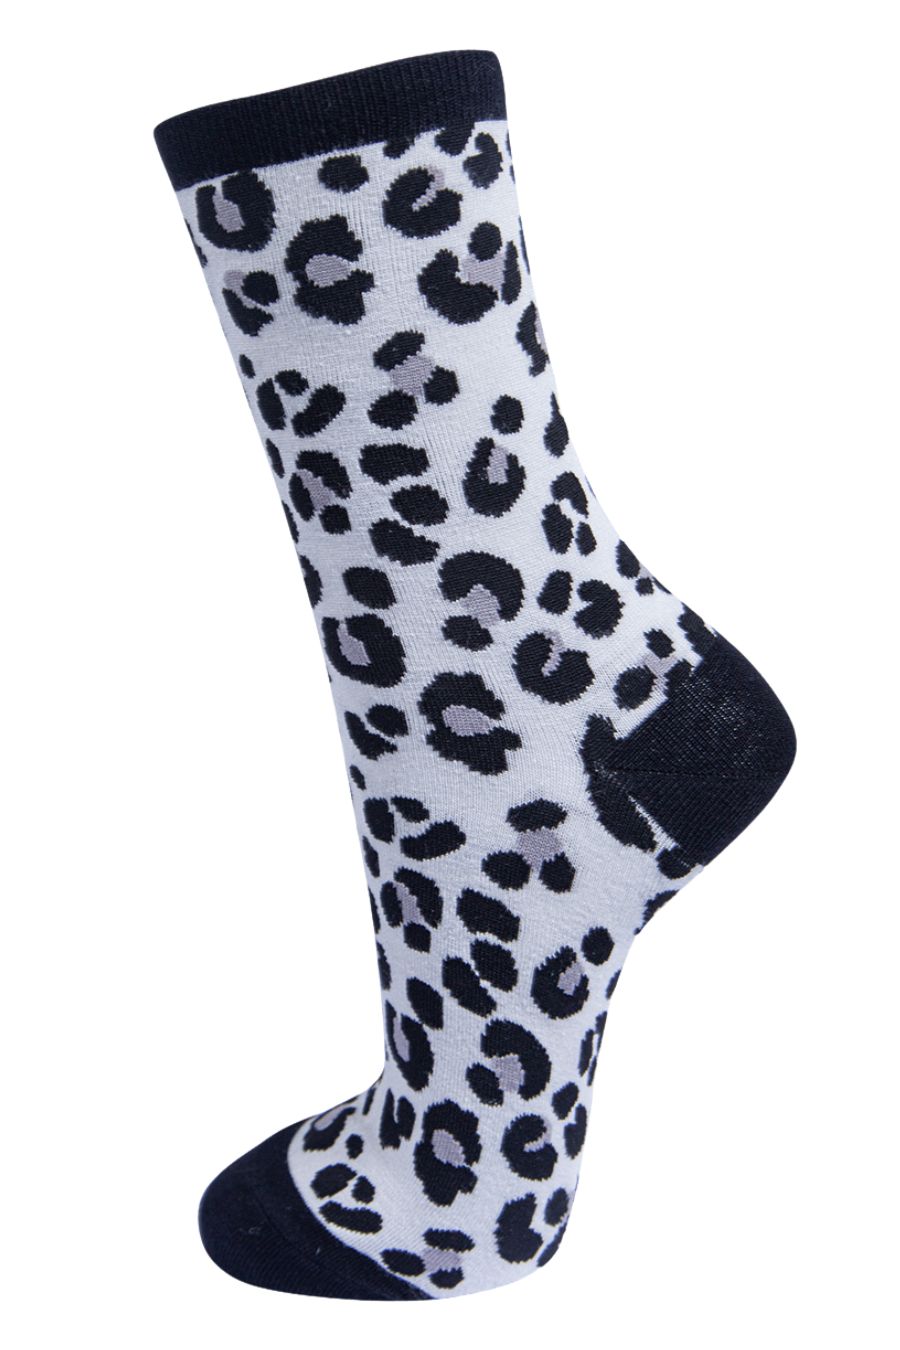 Womens Bamboo Leopard Print Socks Ladies Animal Print Ankle Sock Black